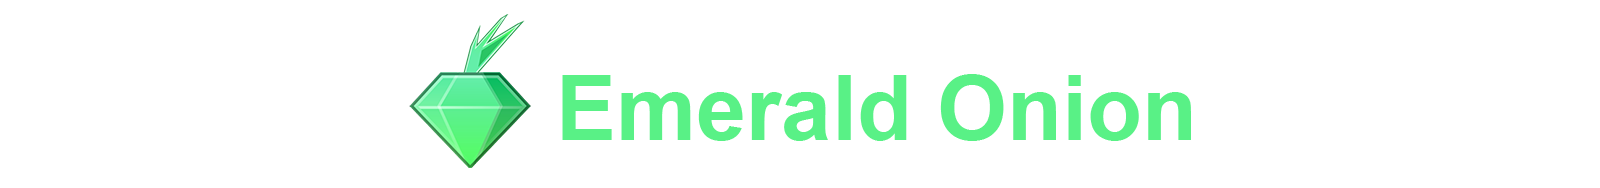 Emerald Onion Logo